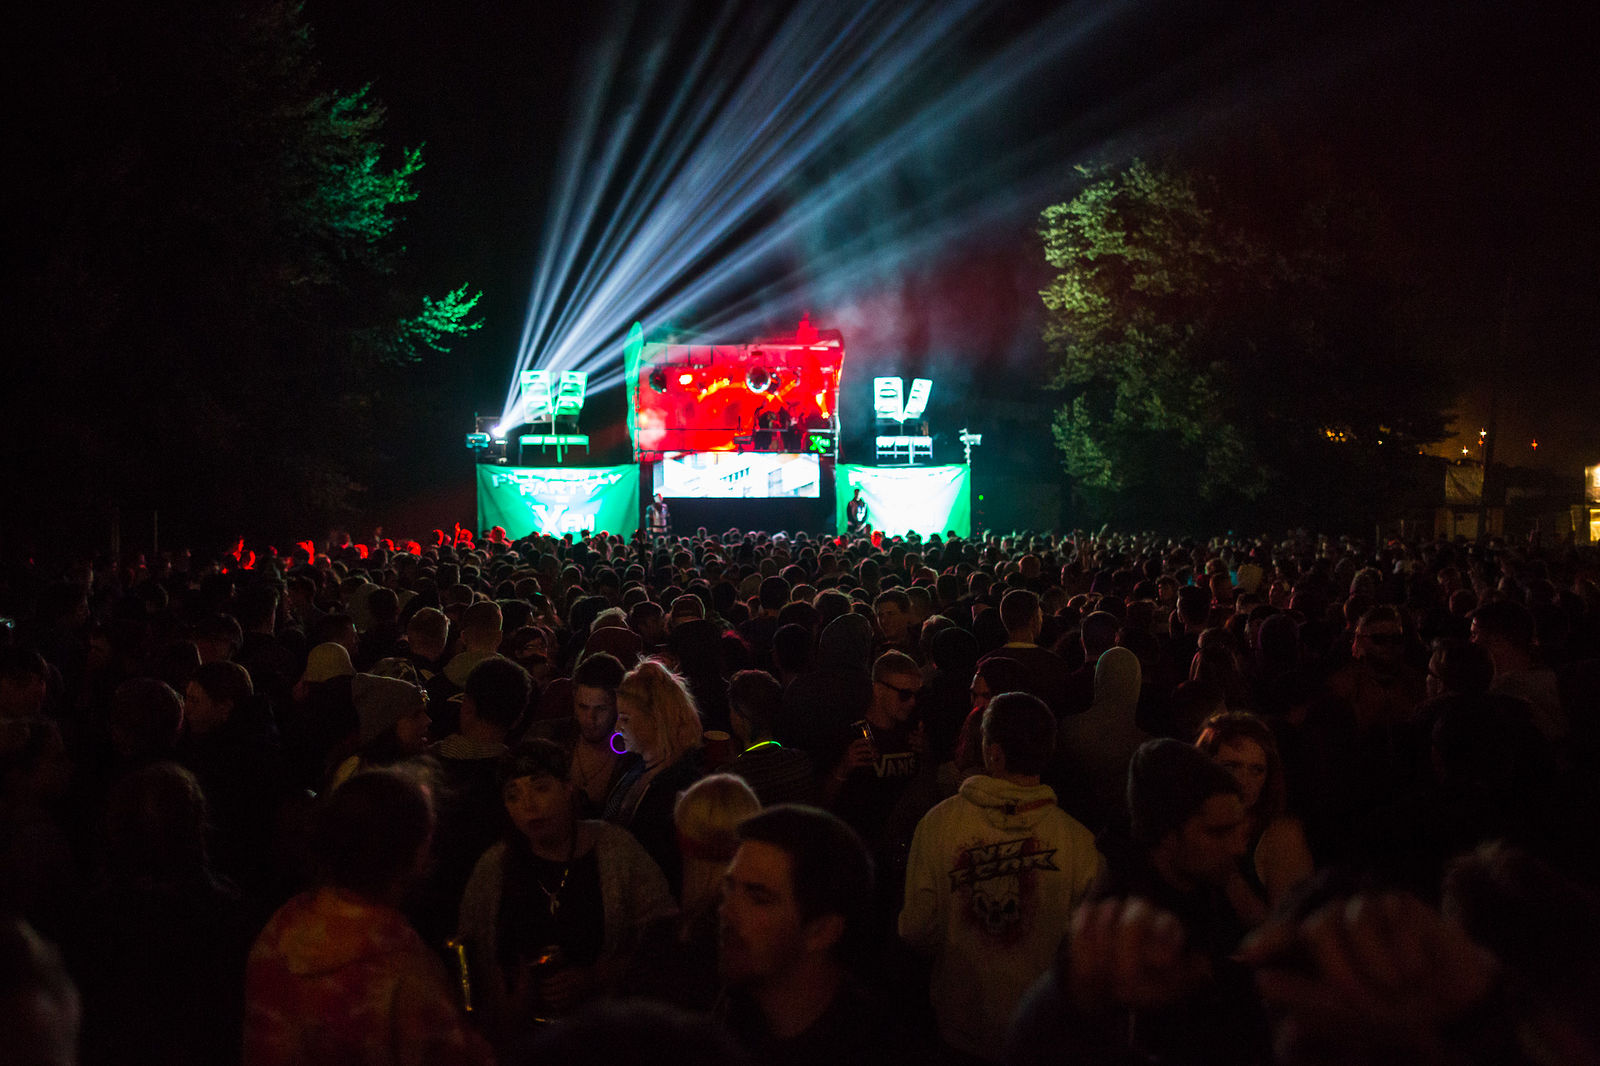 Leeds Festival 2014